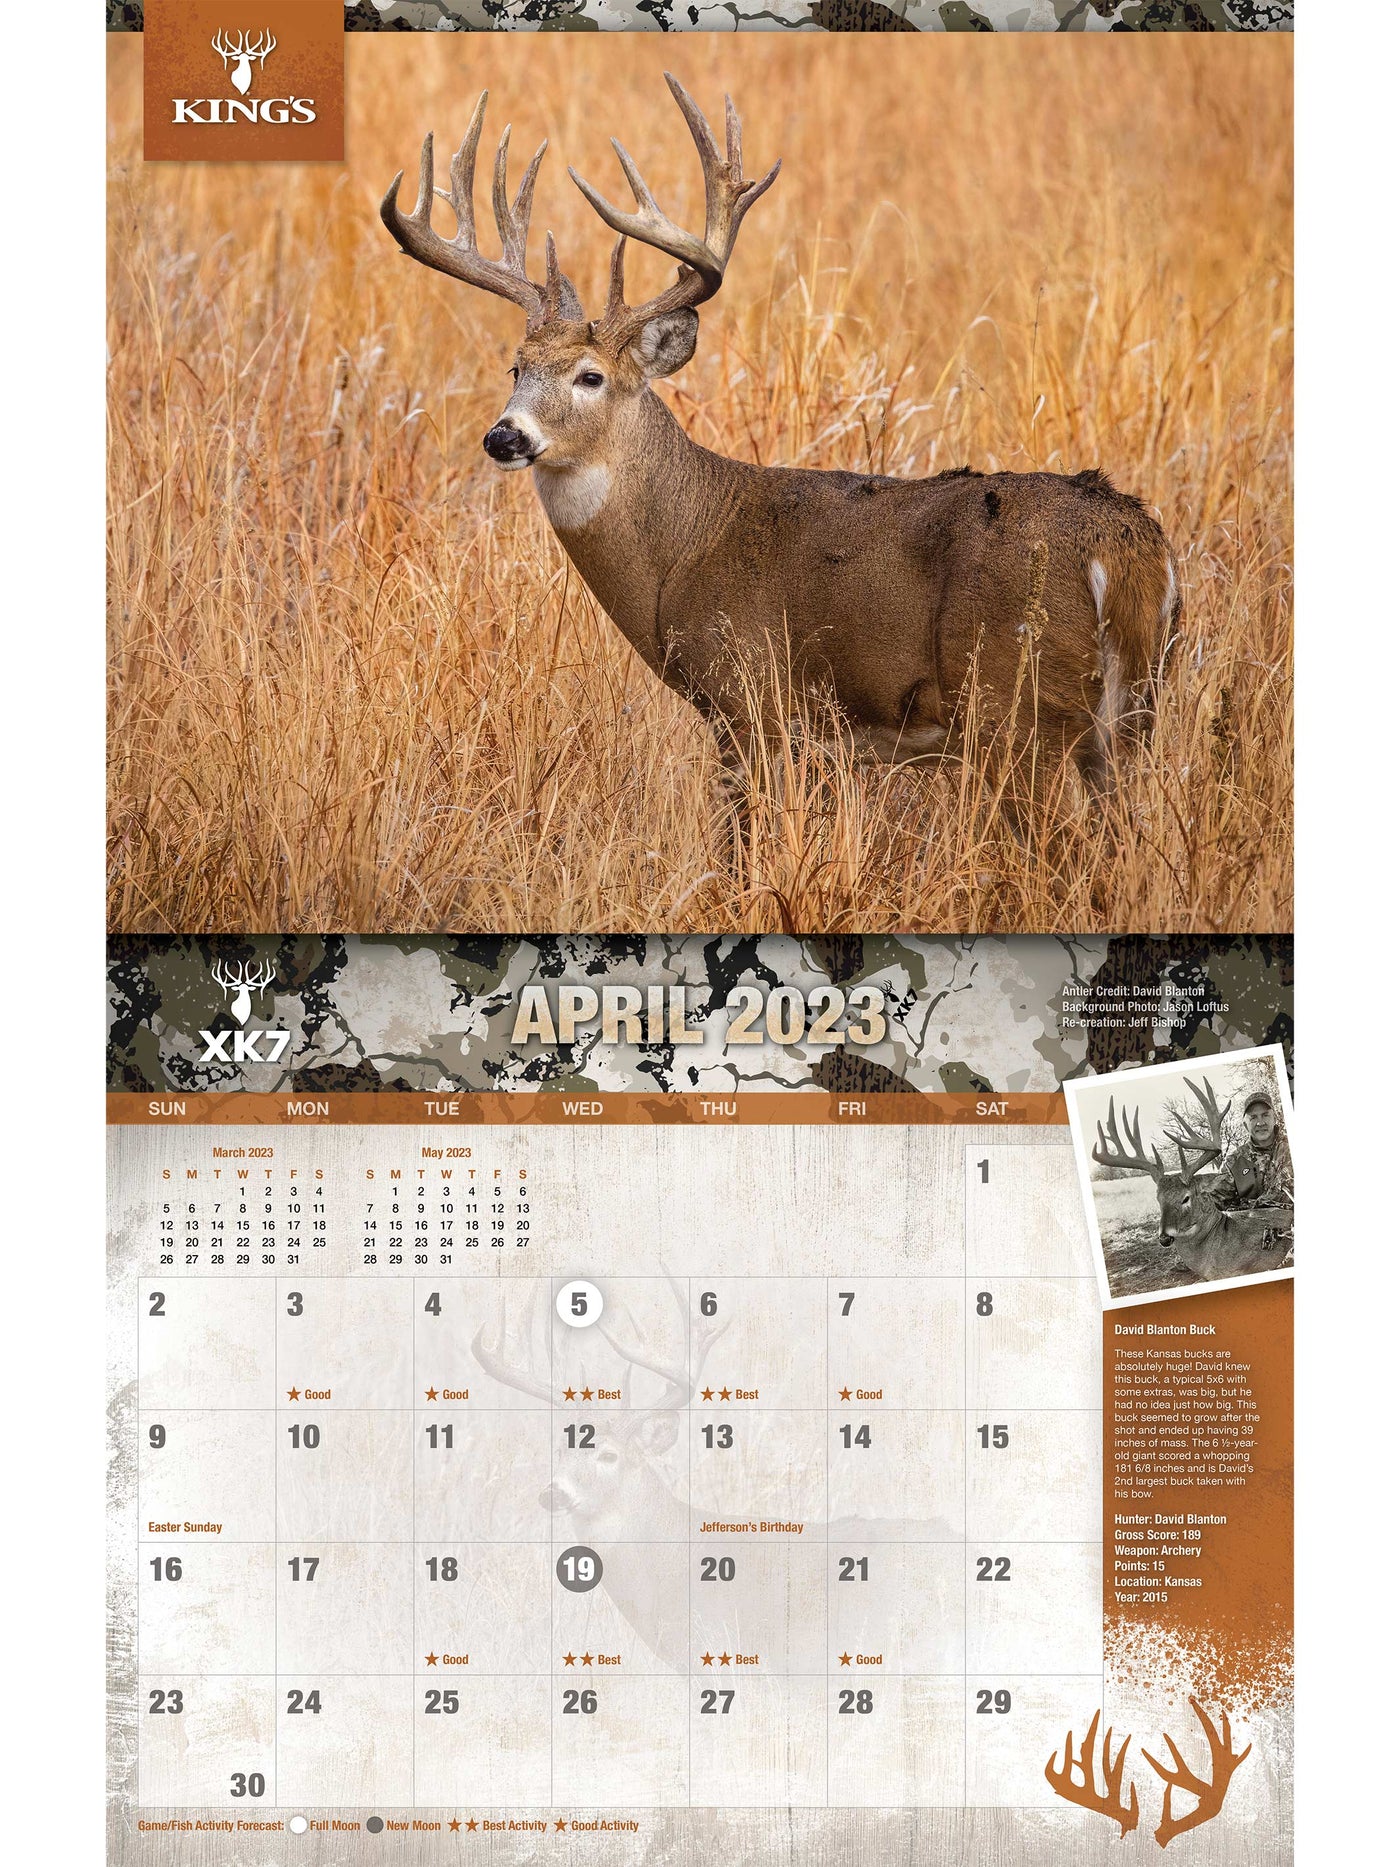 2023 King's Bucks & Bulls Calendar | Corbotras lochi